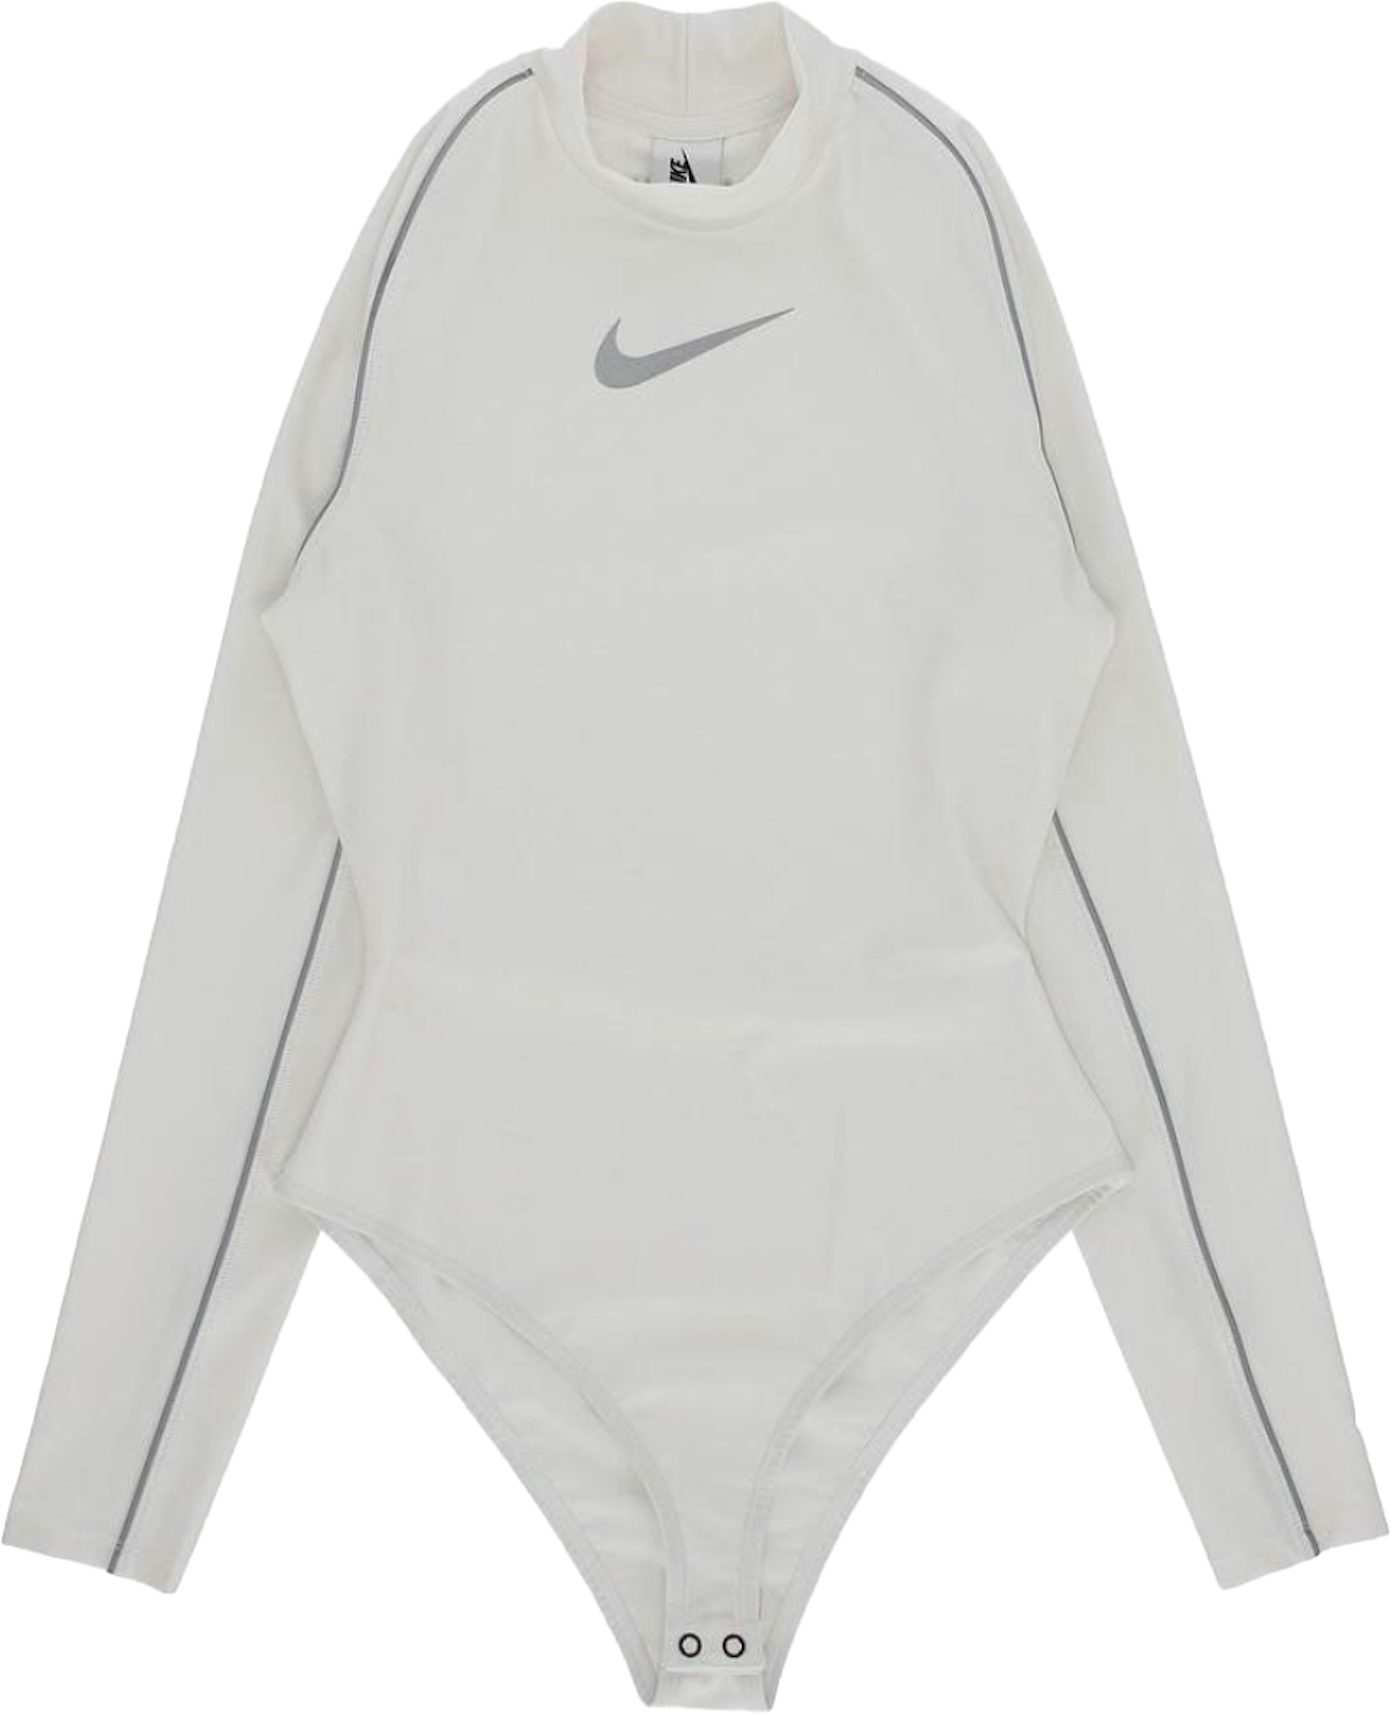 Nike x Ambush NBA Collection Nets Shirt Grey/White/Black - FW20 - US